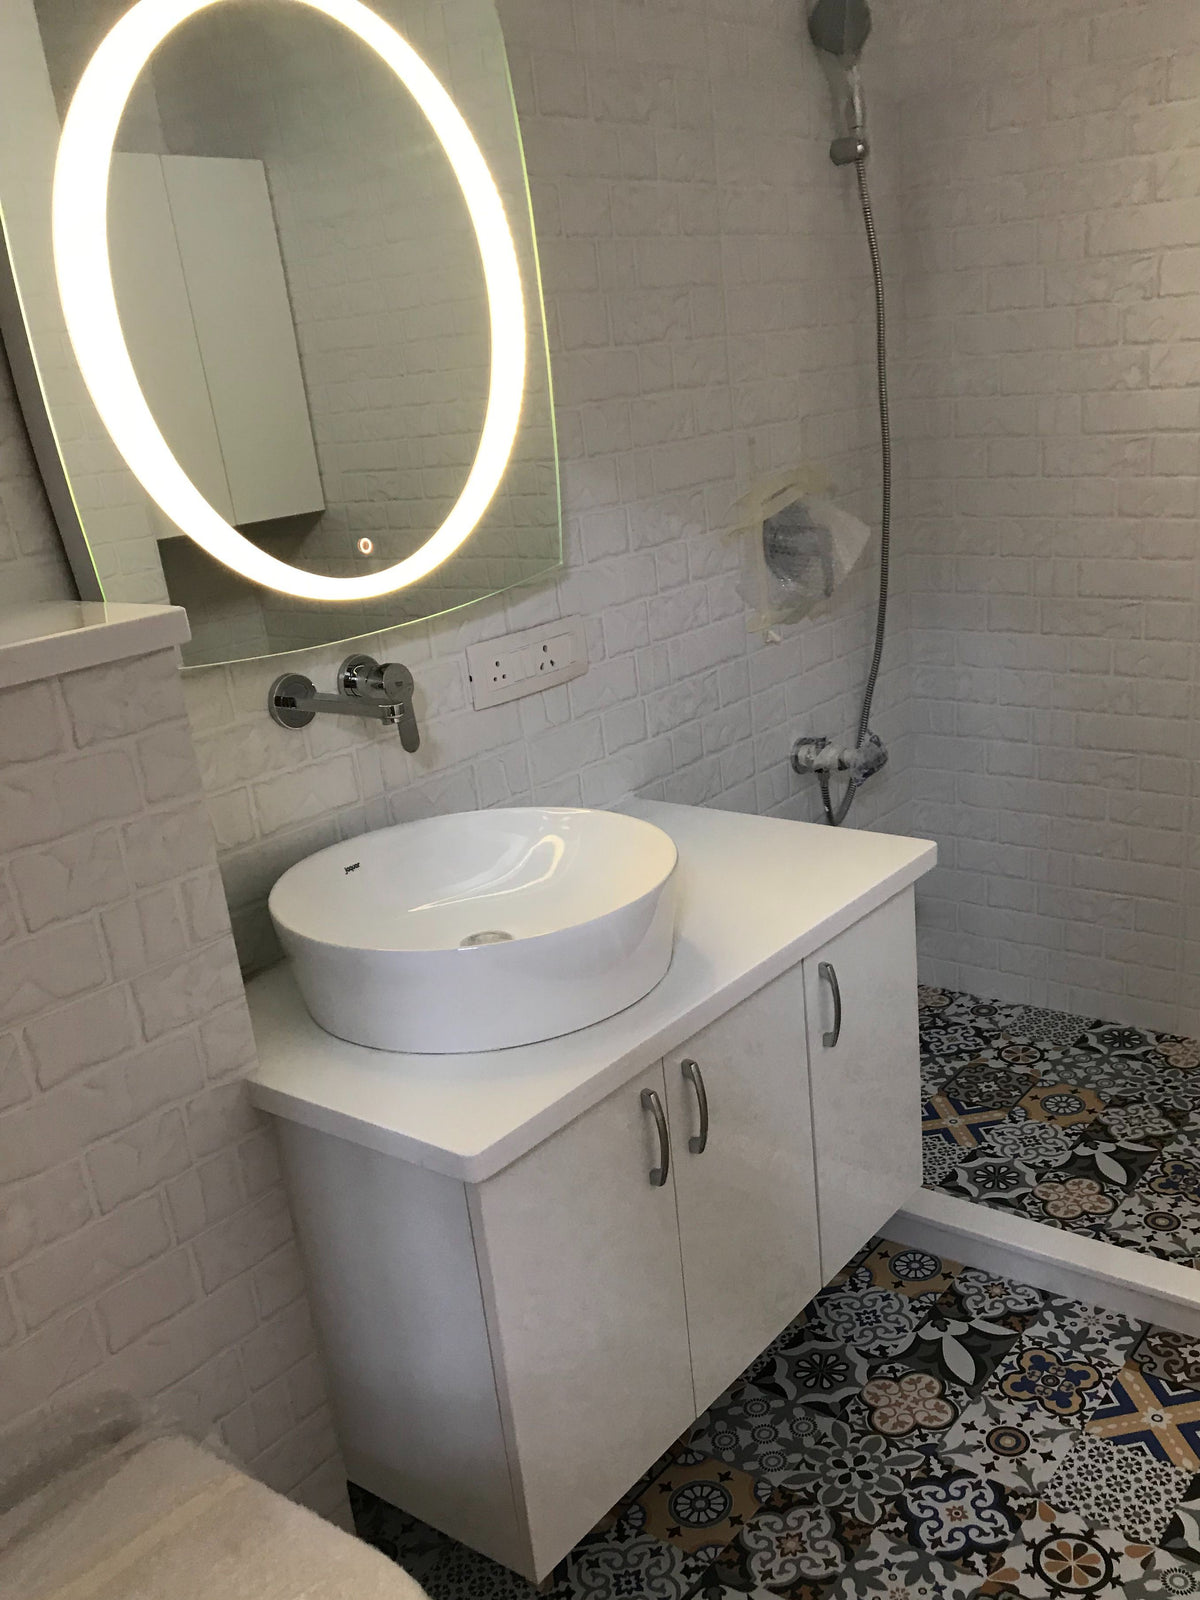 Complete Bathroom Vanity Set